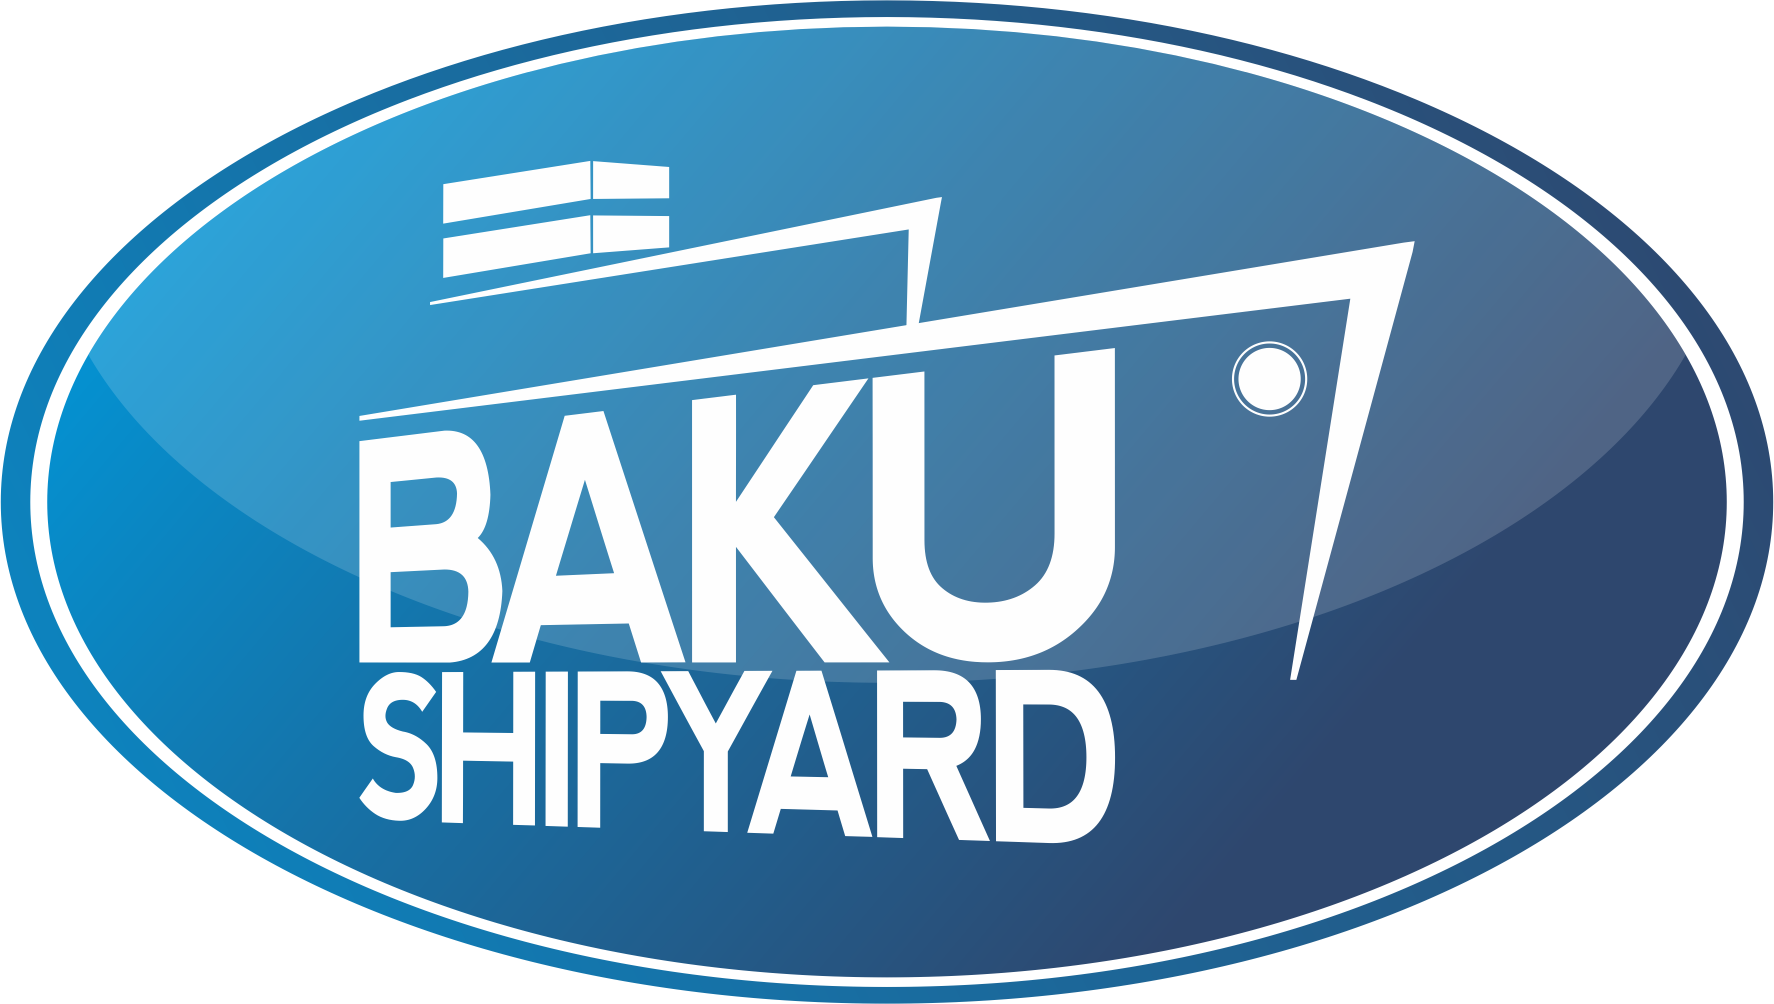 Bakushipyard